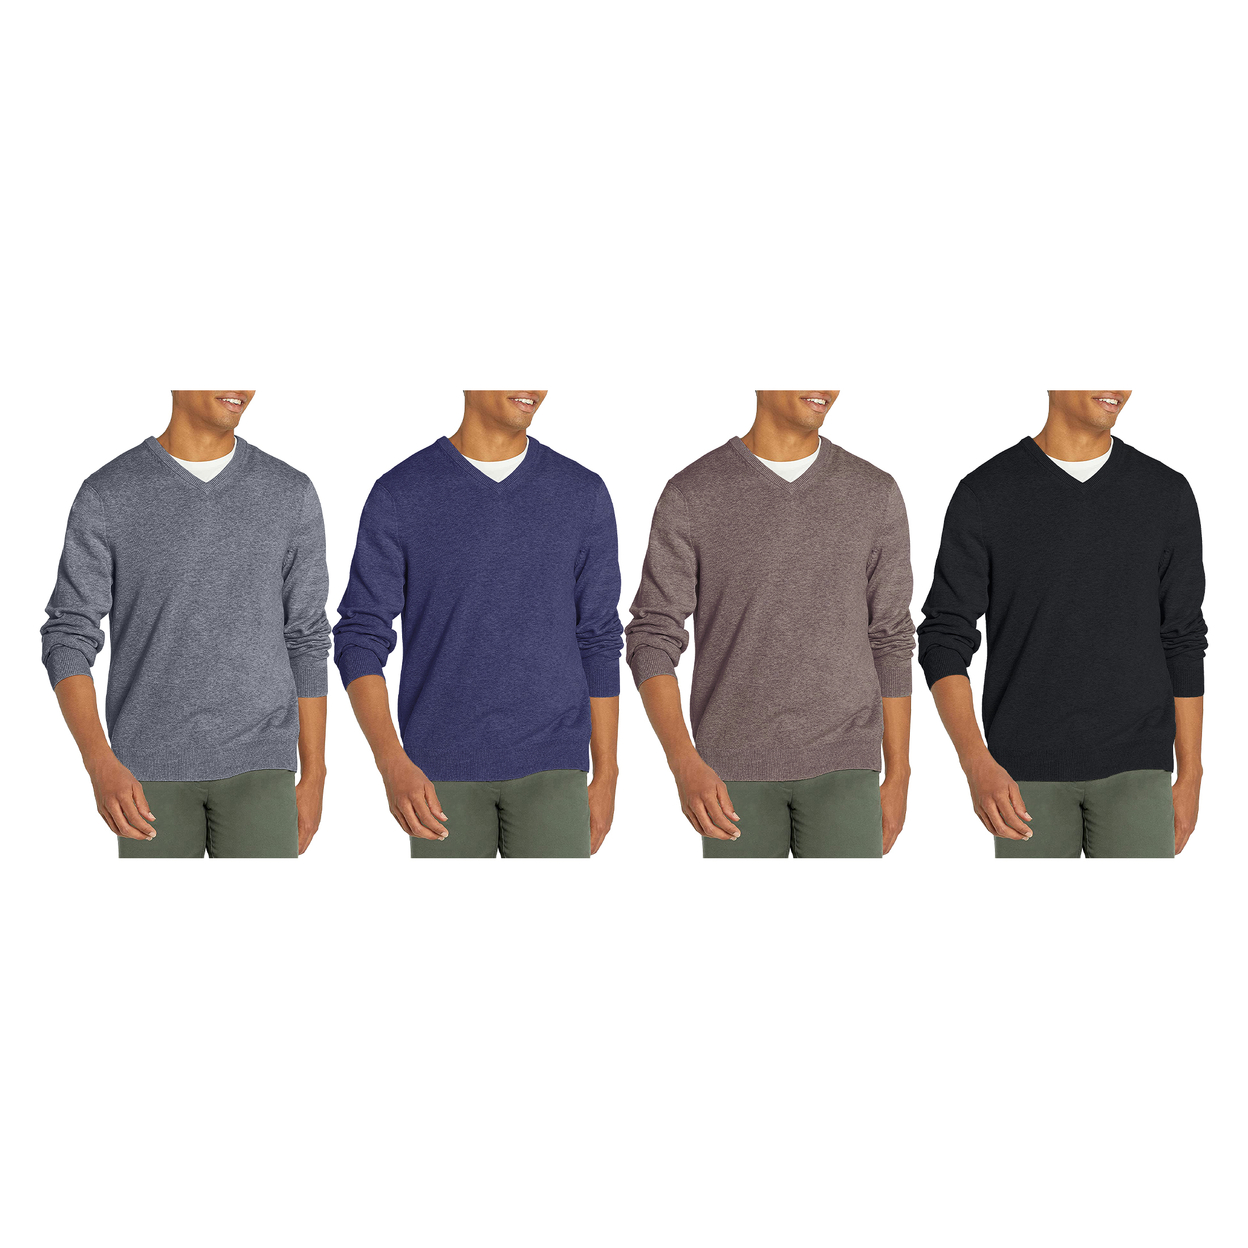 2-Pack: Men's Casual Ultra Soft Slim Fit Warm Knit V-Neck Sweater - Black & Brown, Large